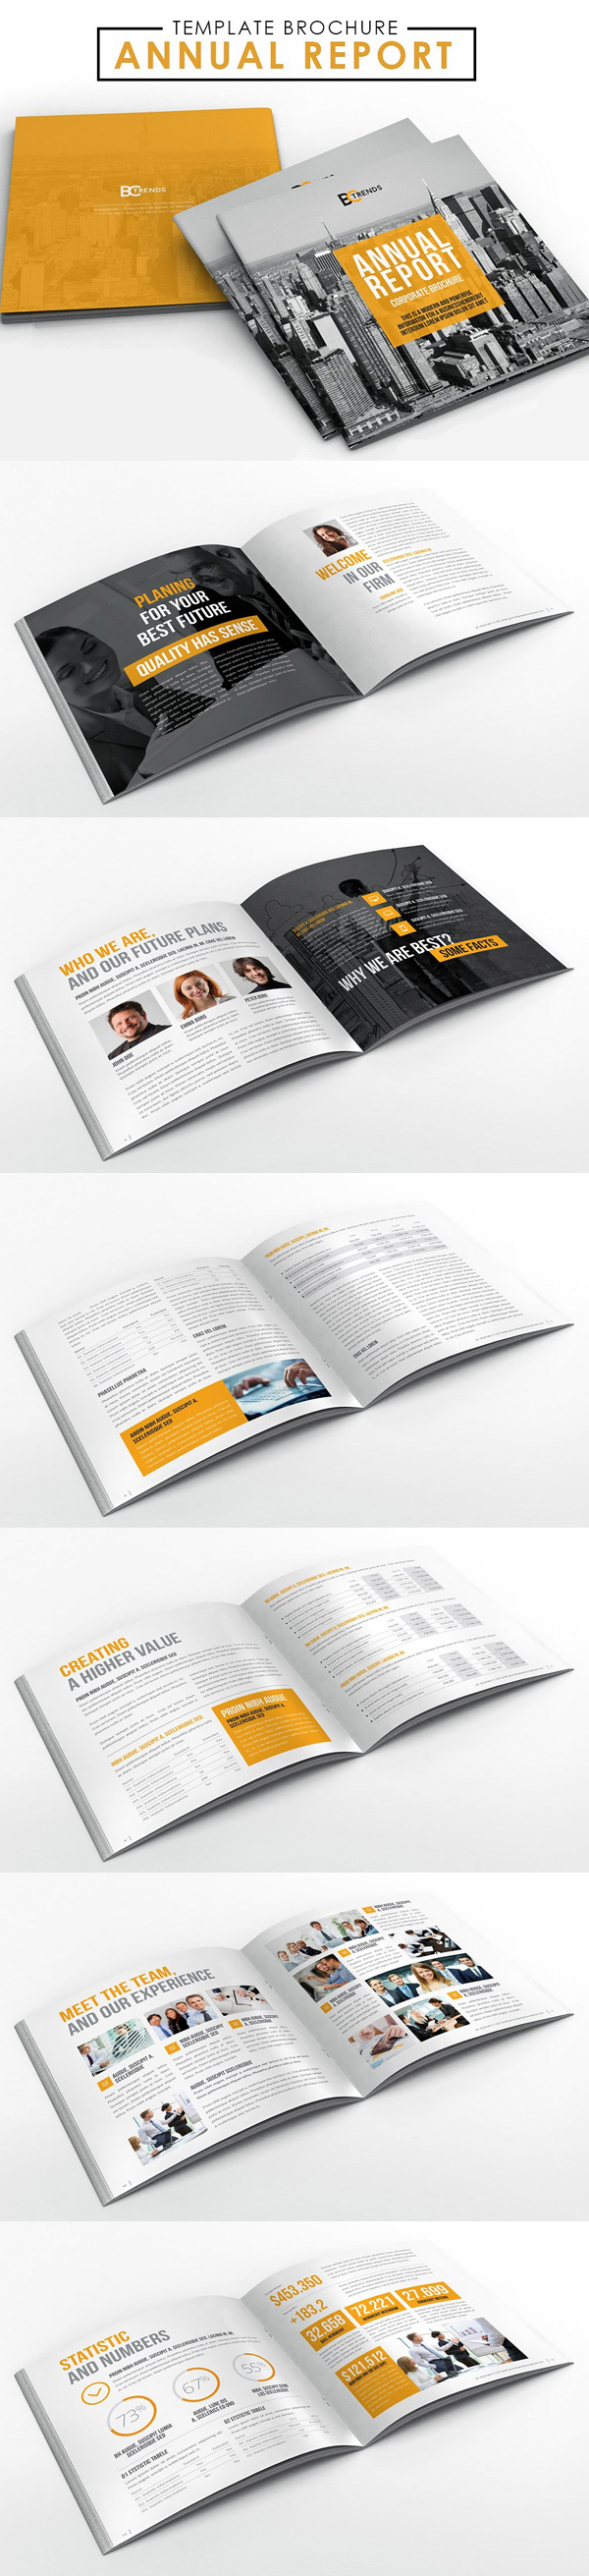 100 Professional Corporate Brochure Templates - 17